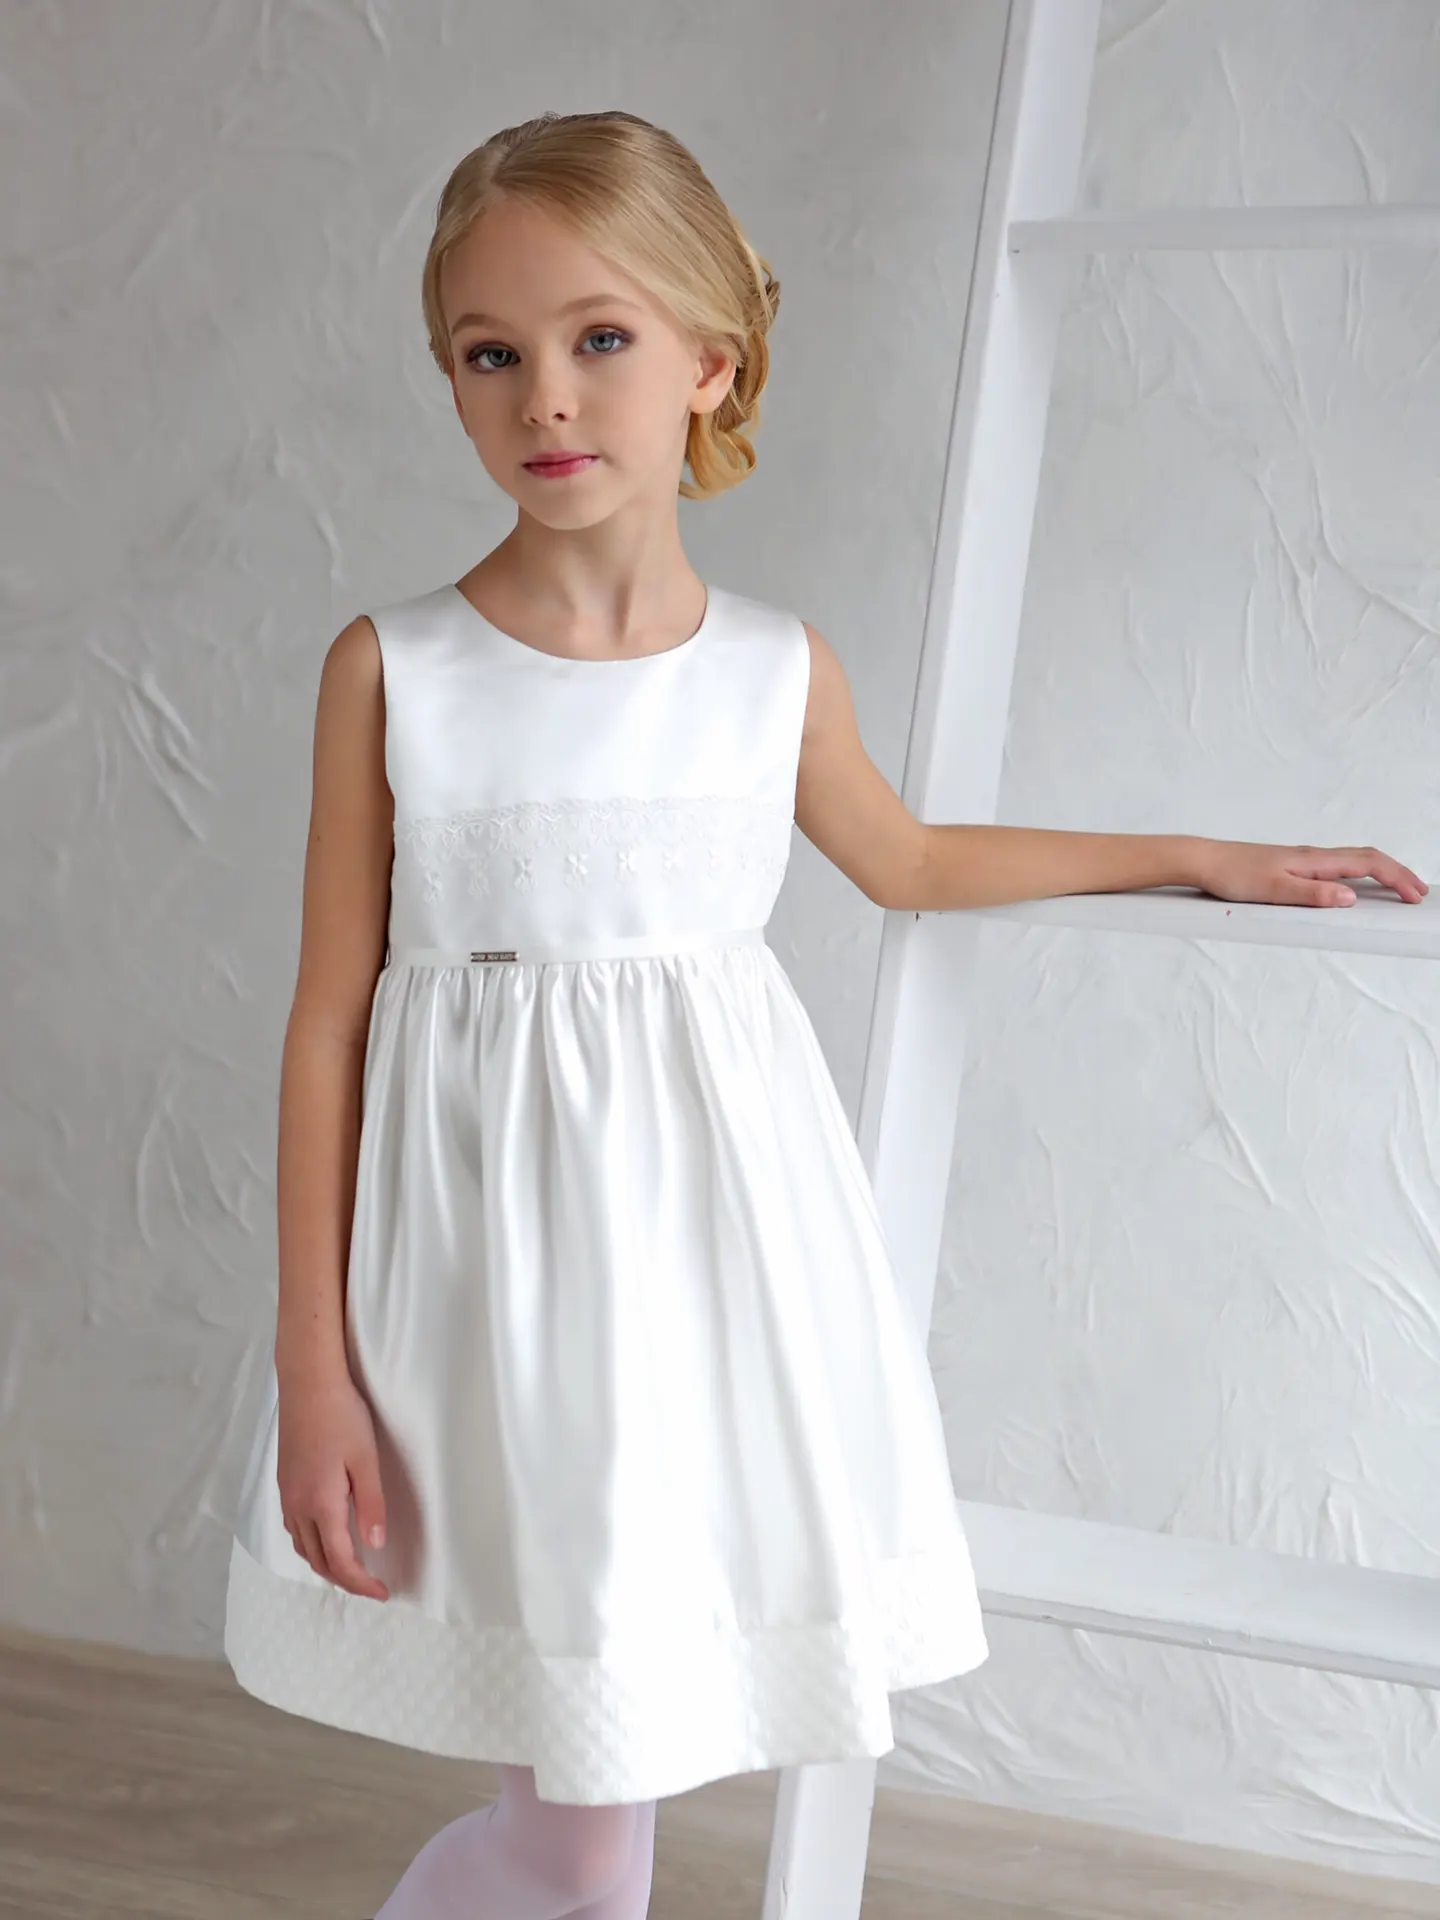 Stylish, High-quality, Comfortable, Dubai Occasion white dress for girl